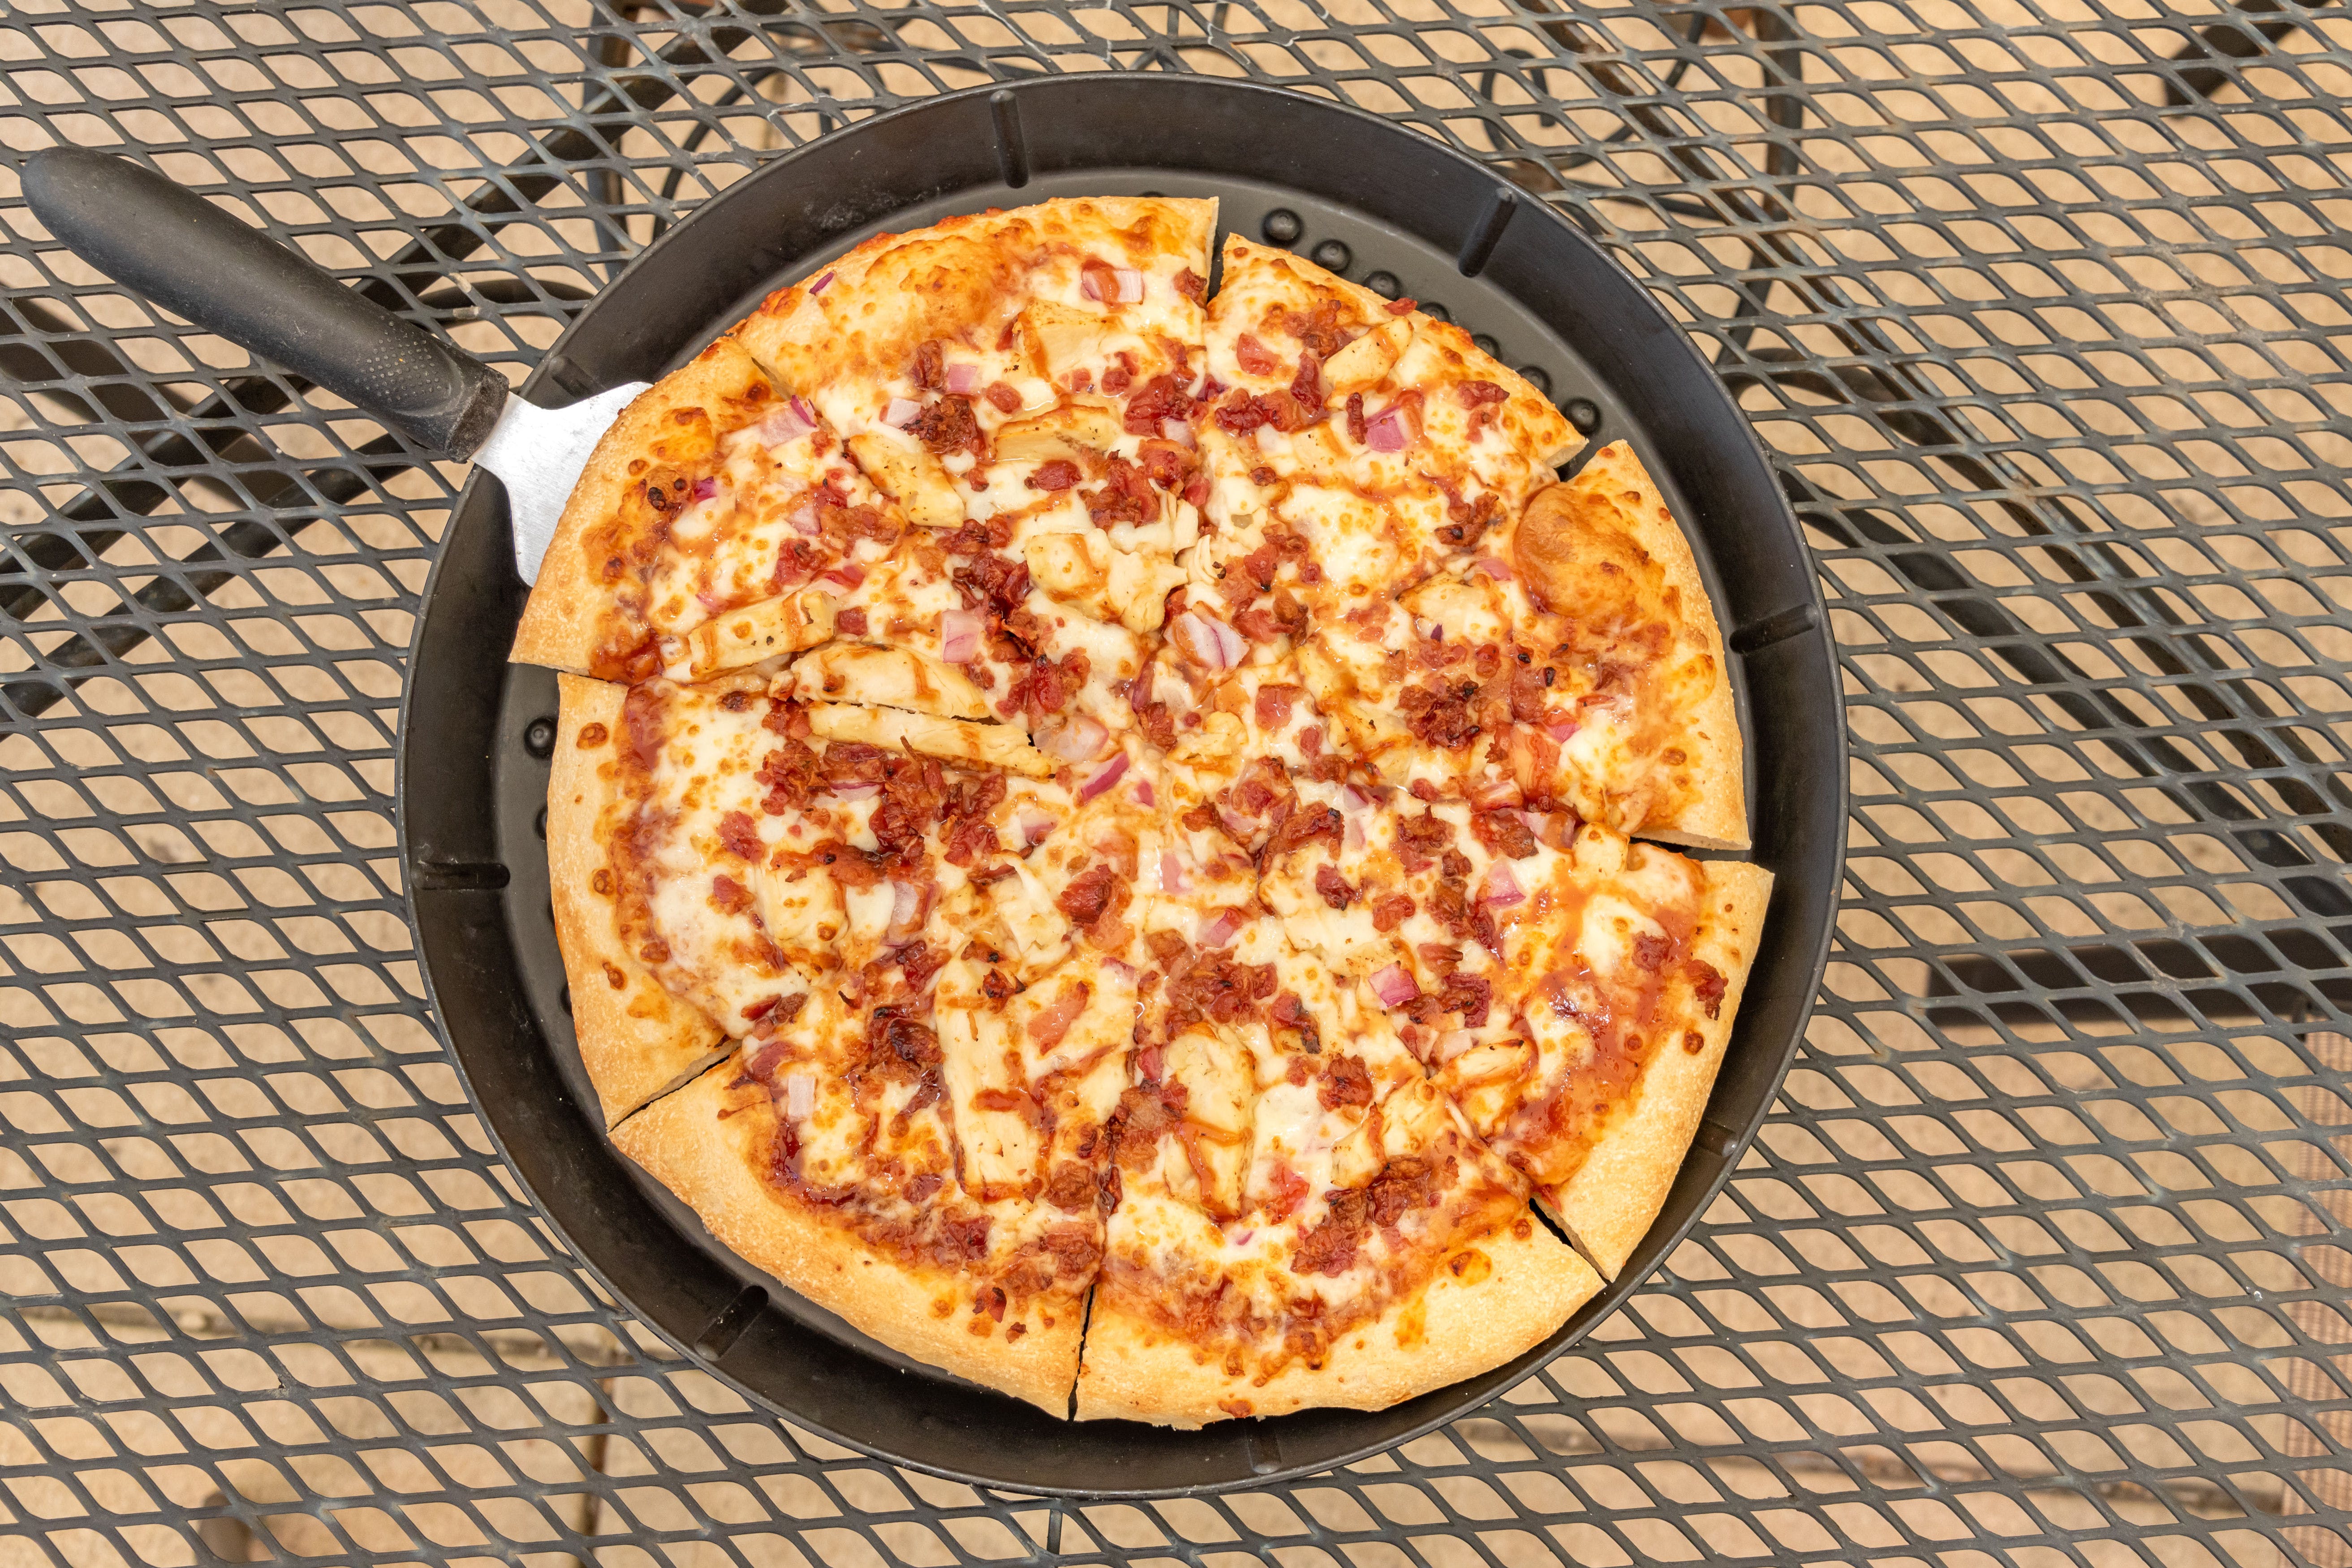 rockstar pizza order online